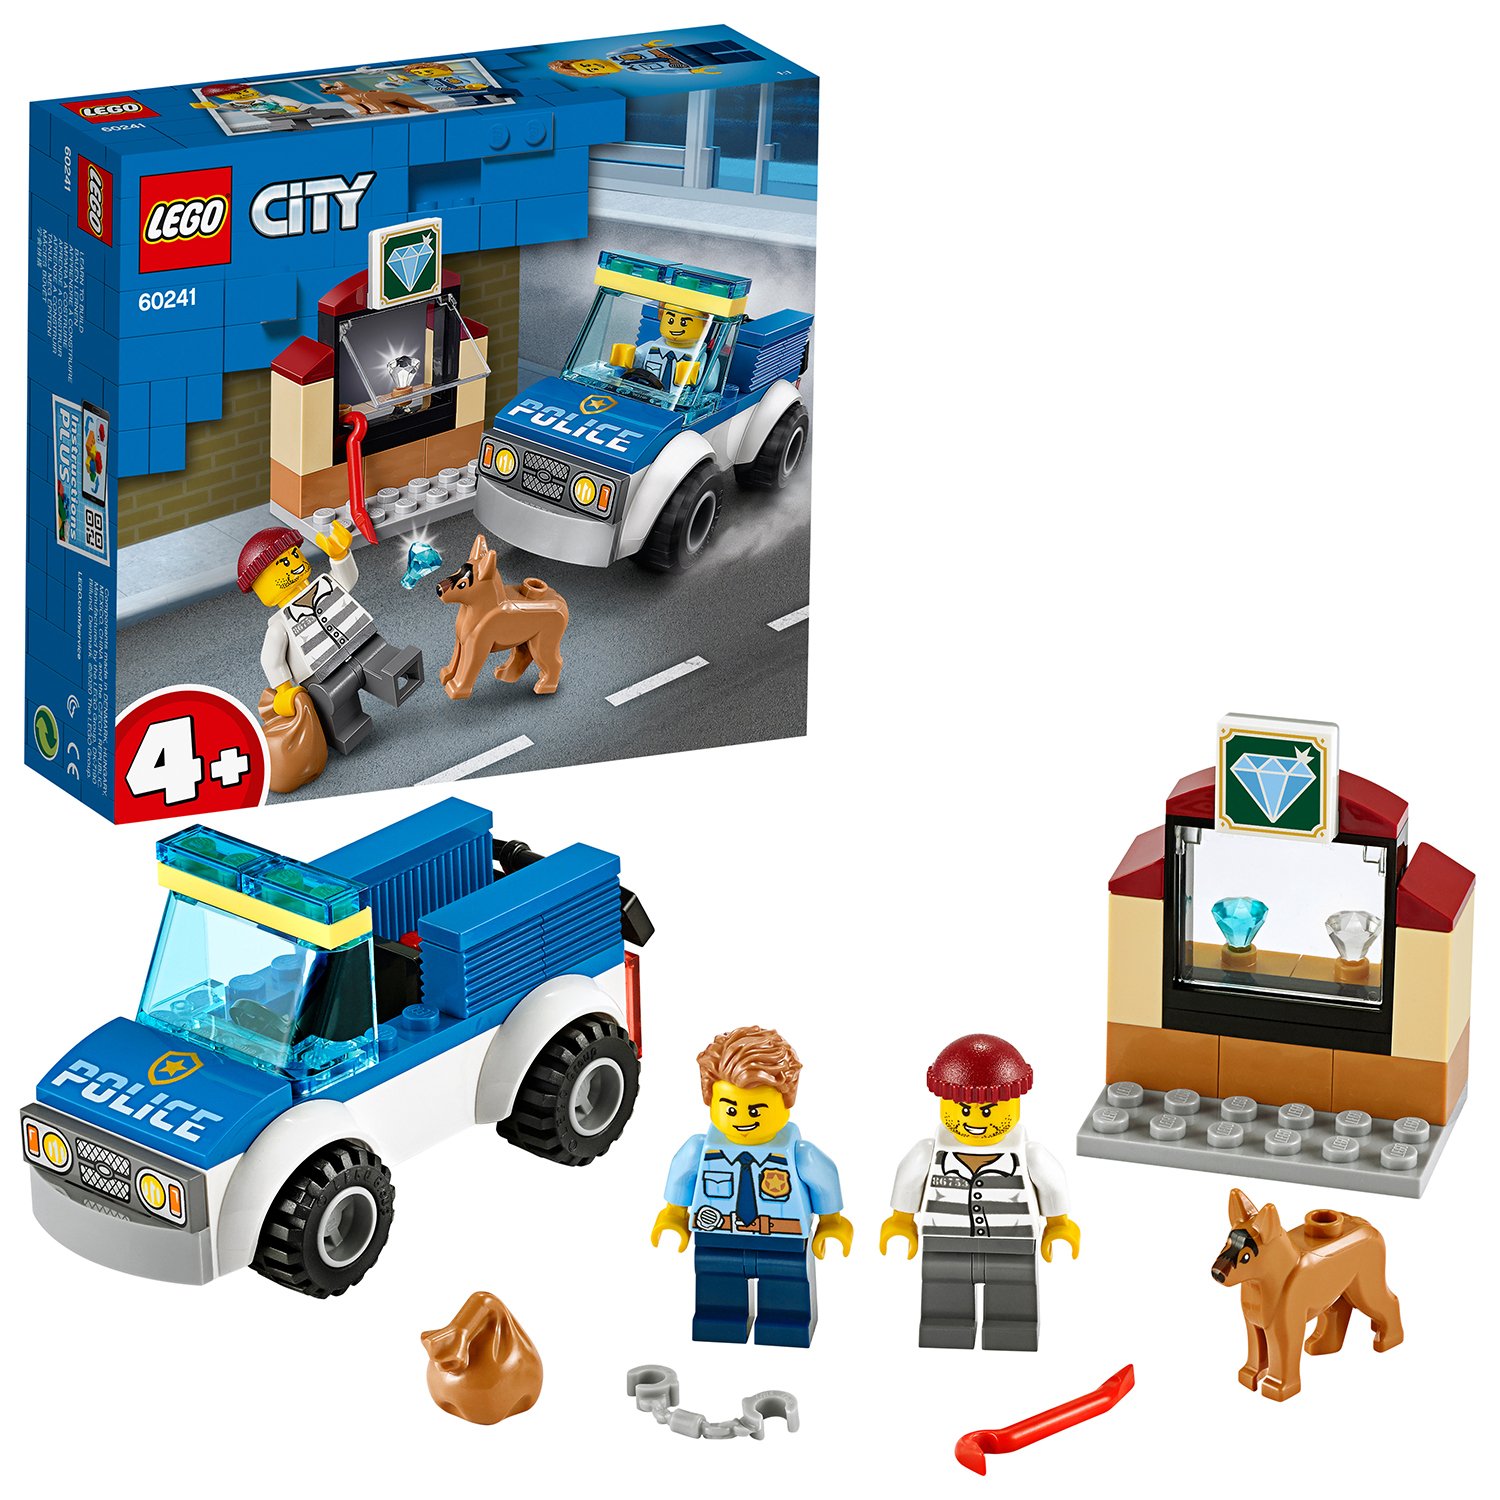 LEGO City Police Dog Unit Building Set Review